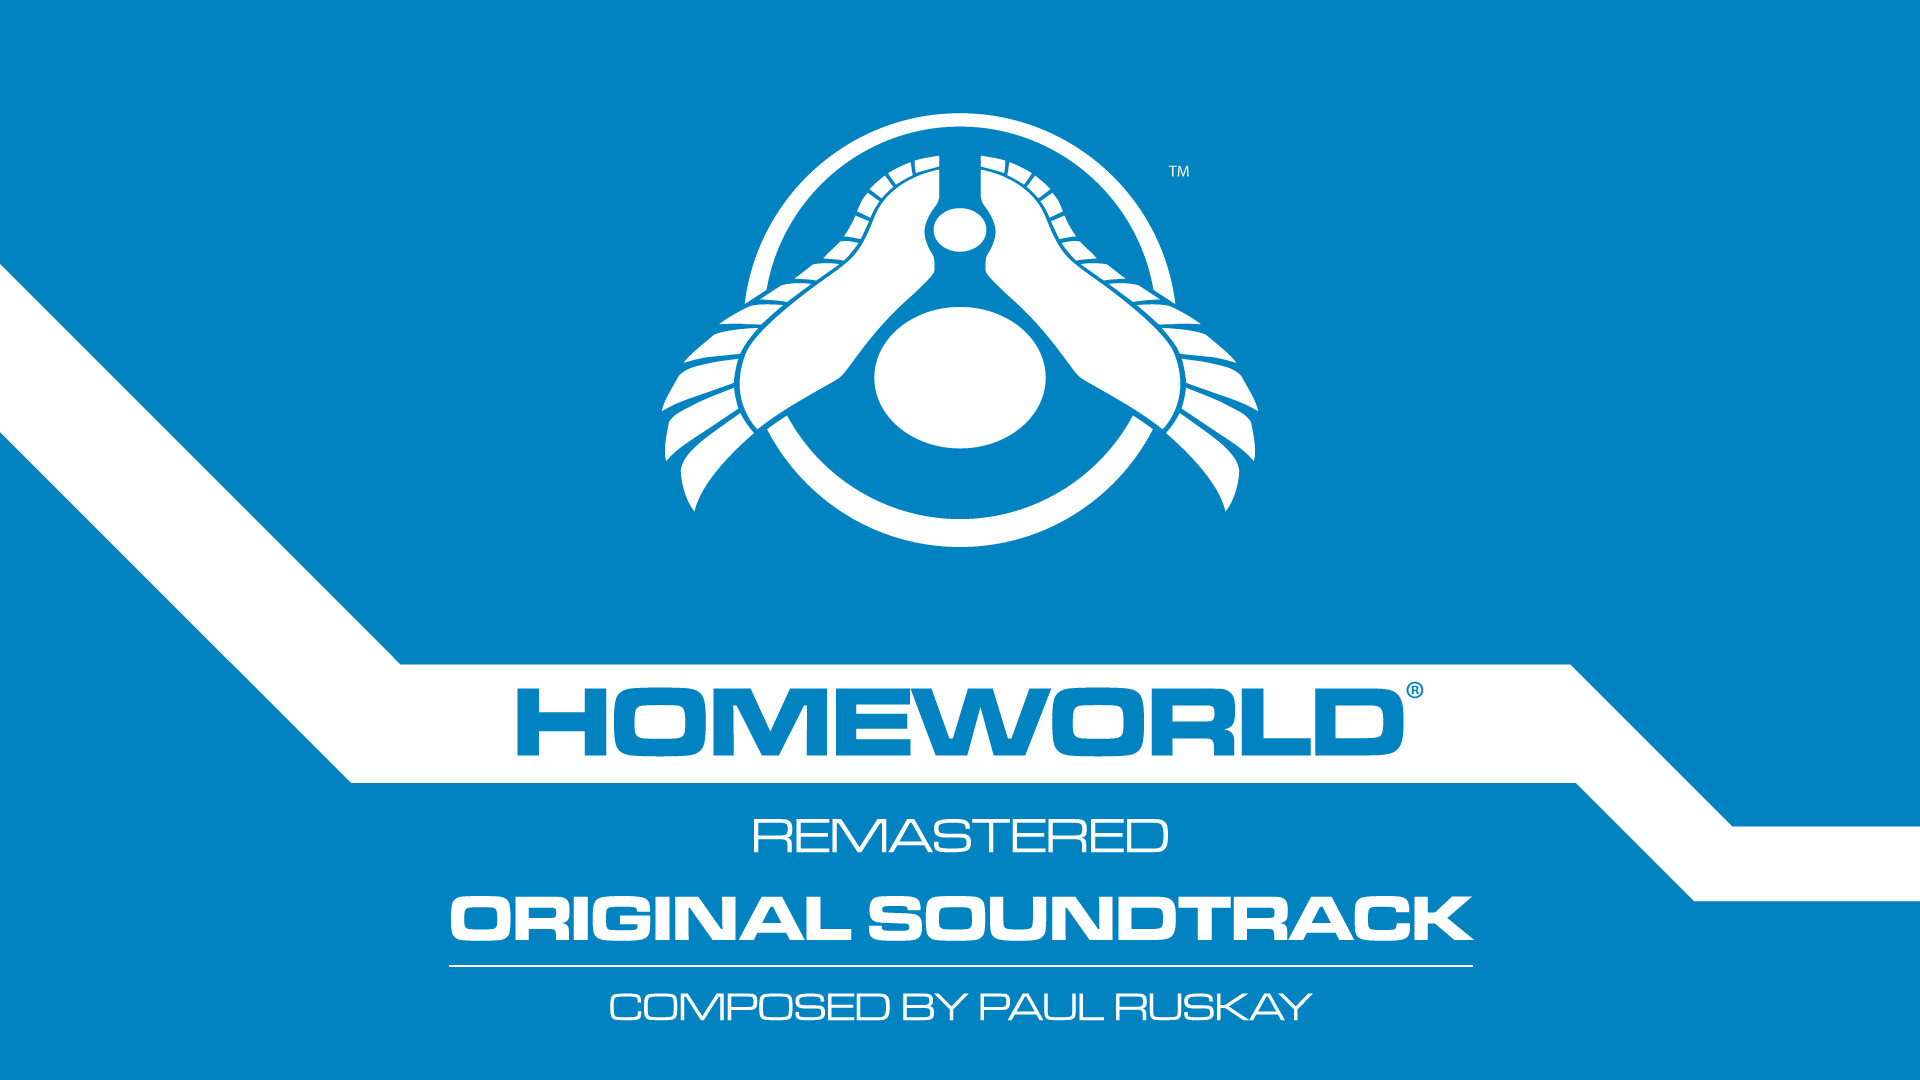 Homeworld 1 Remastered Soundtrack Featured Screenshot #1